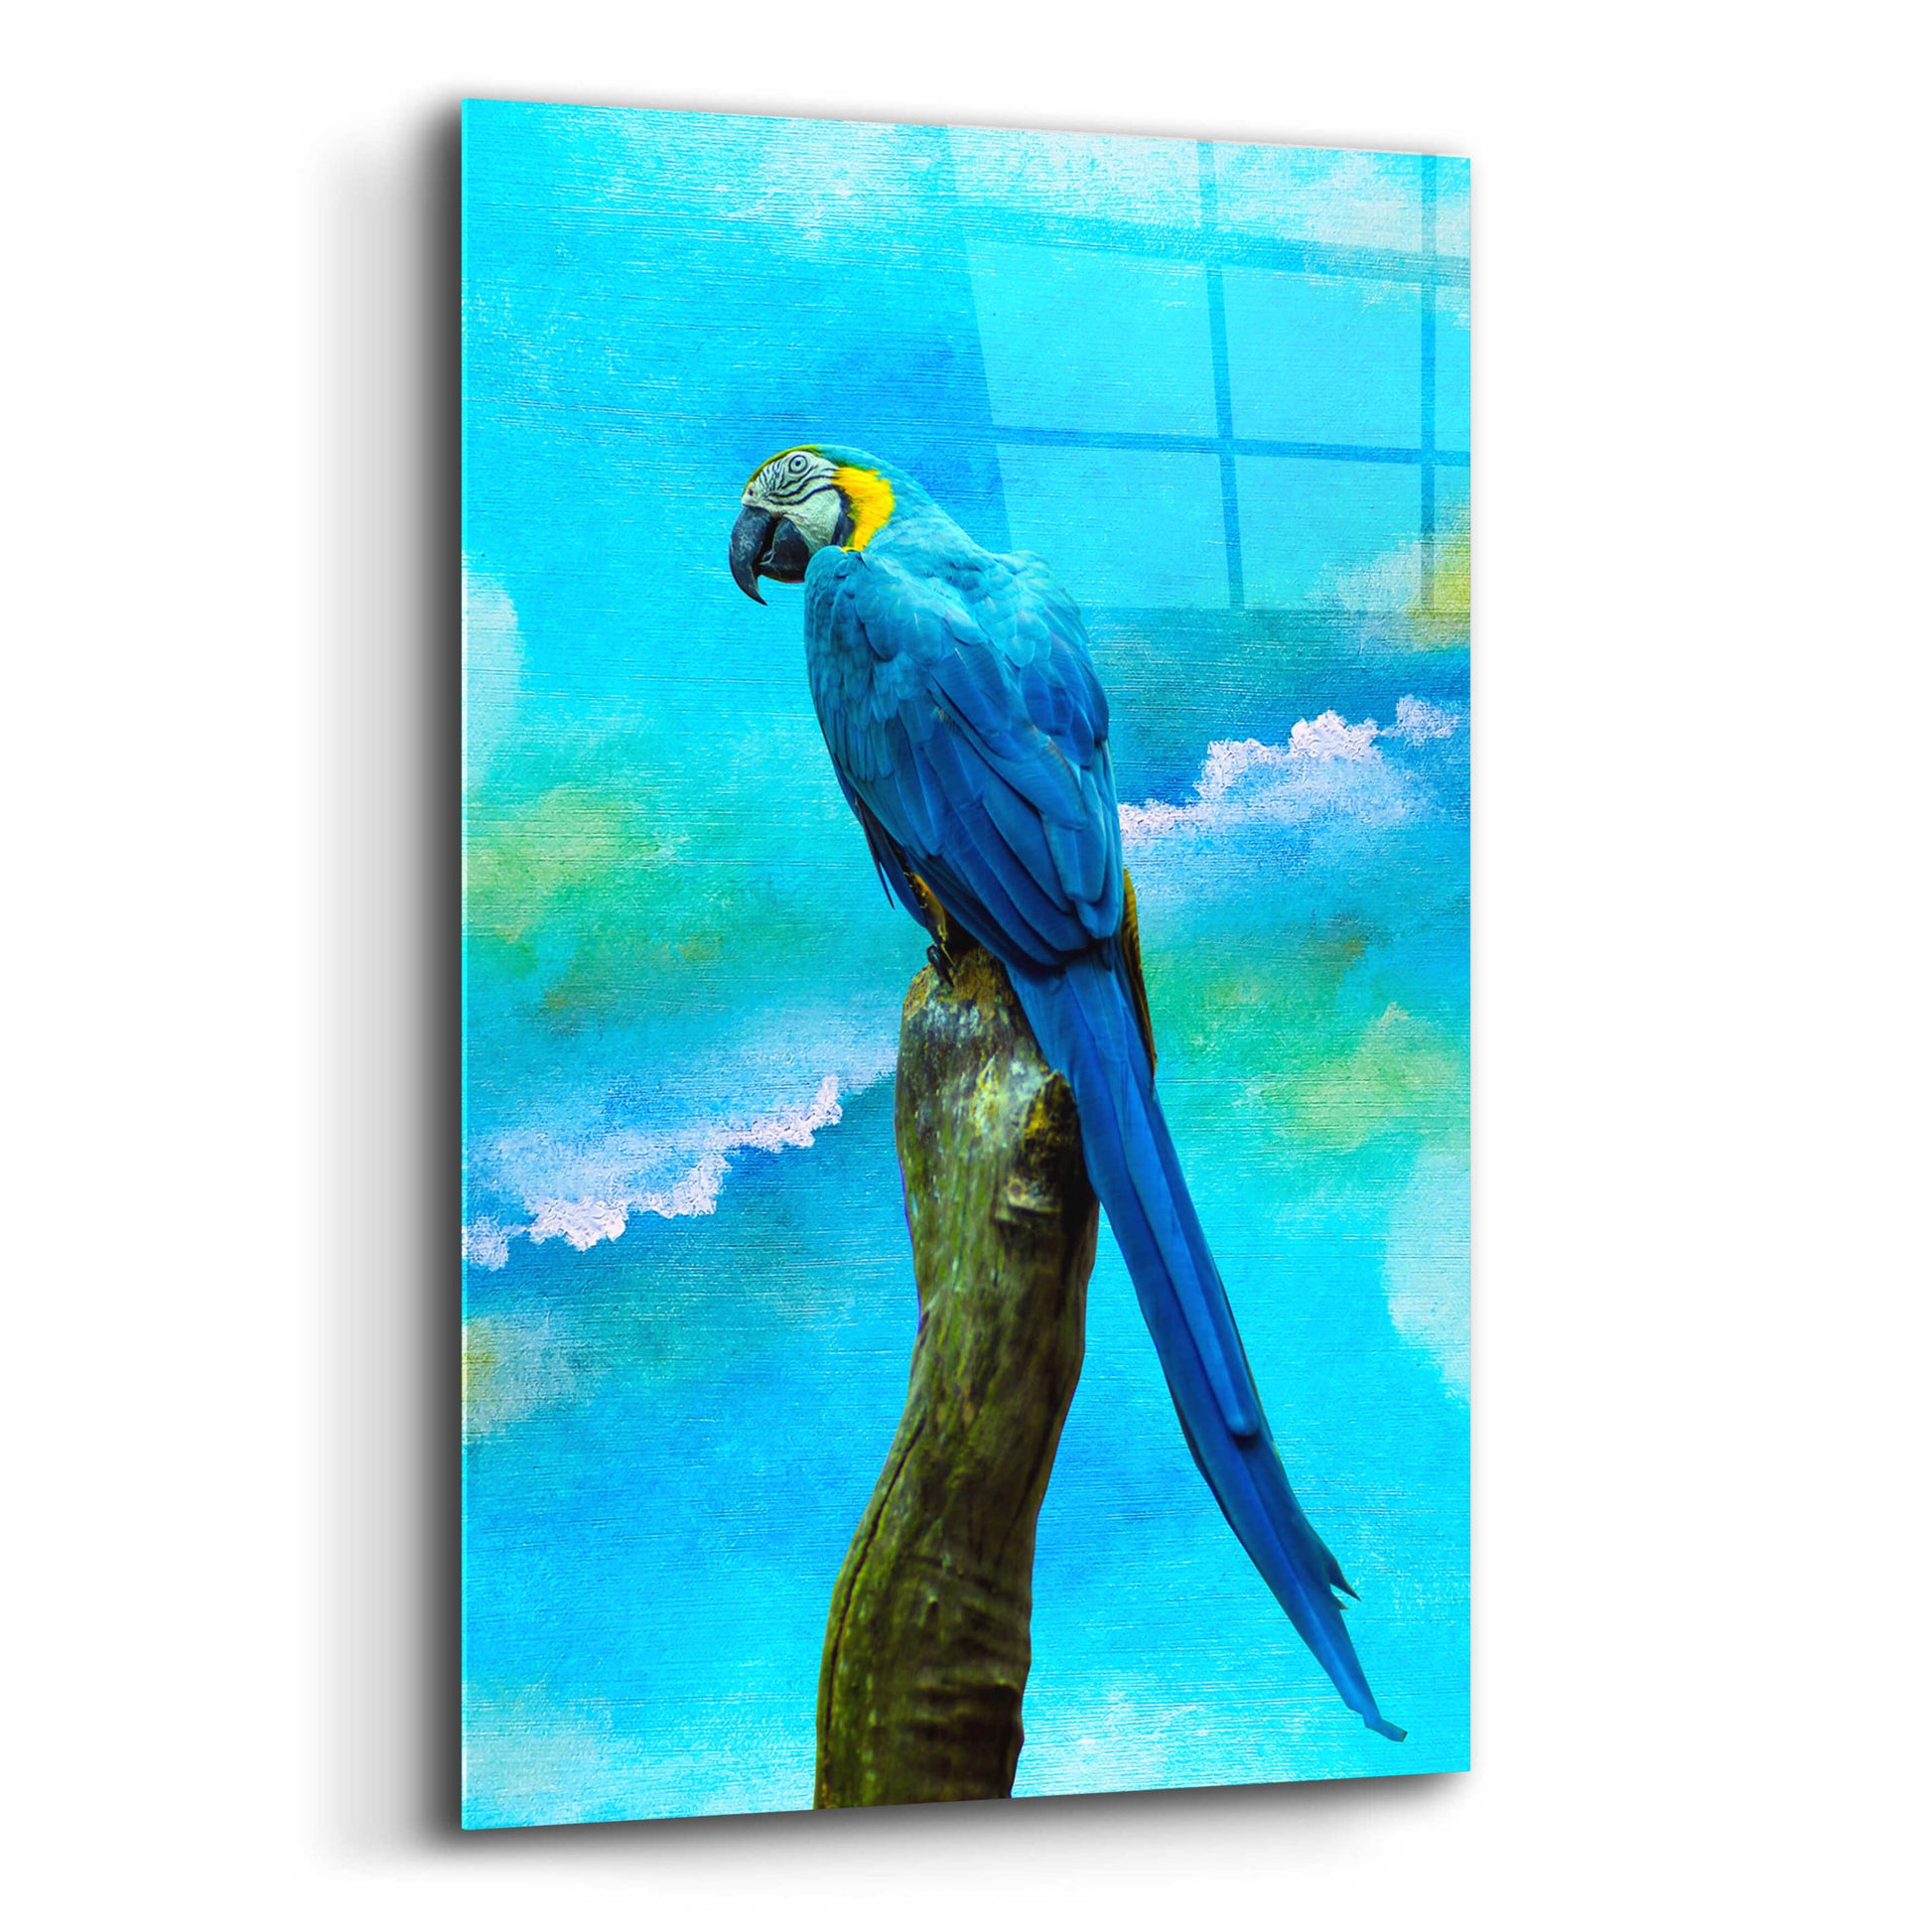 Epic Art 'Blue Parrot' by Ata Alishahi, Acrylic Glass Wall Art,16x24